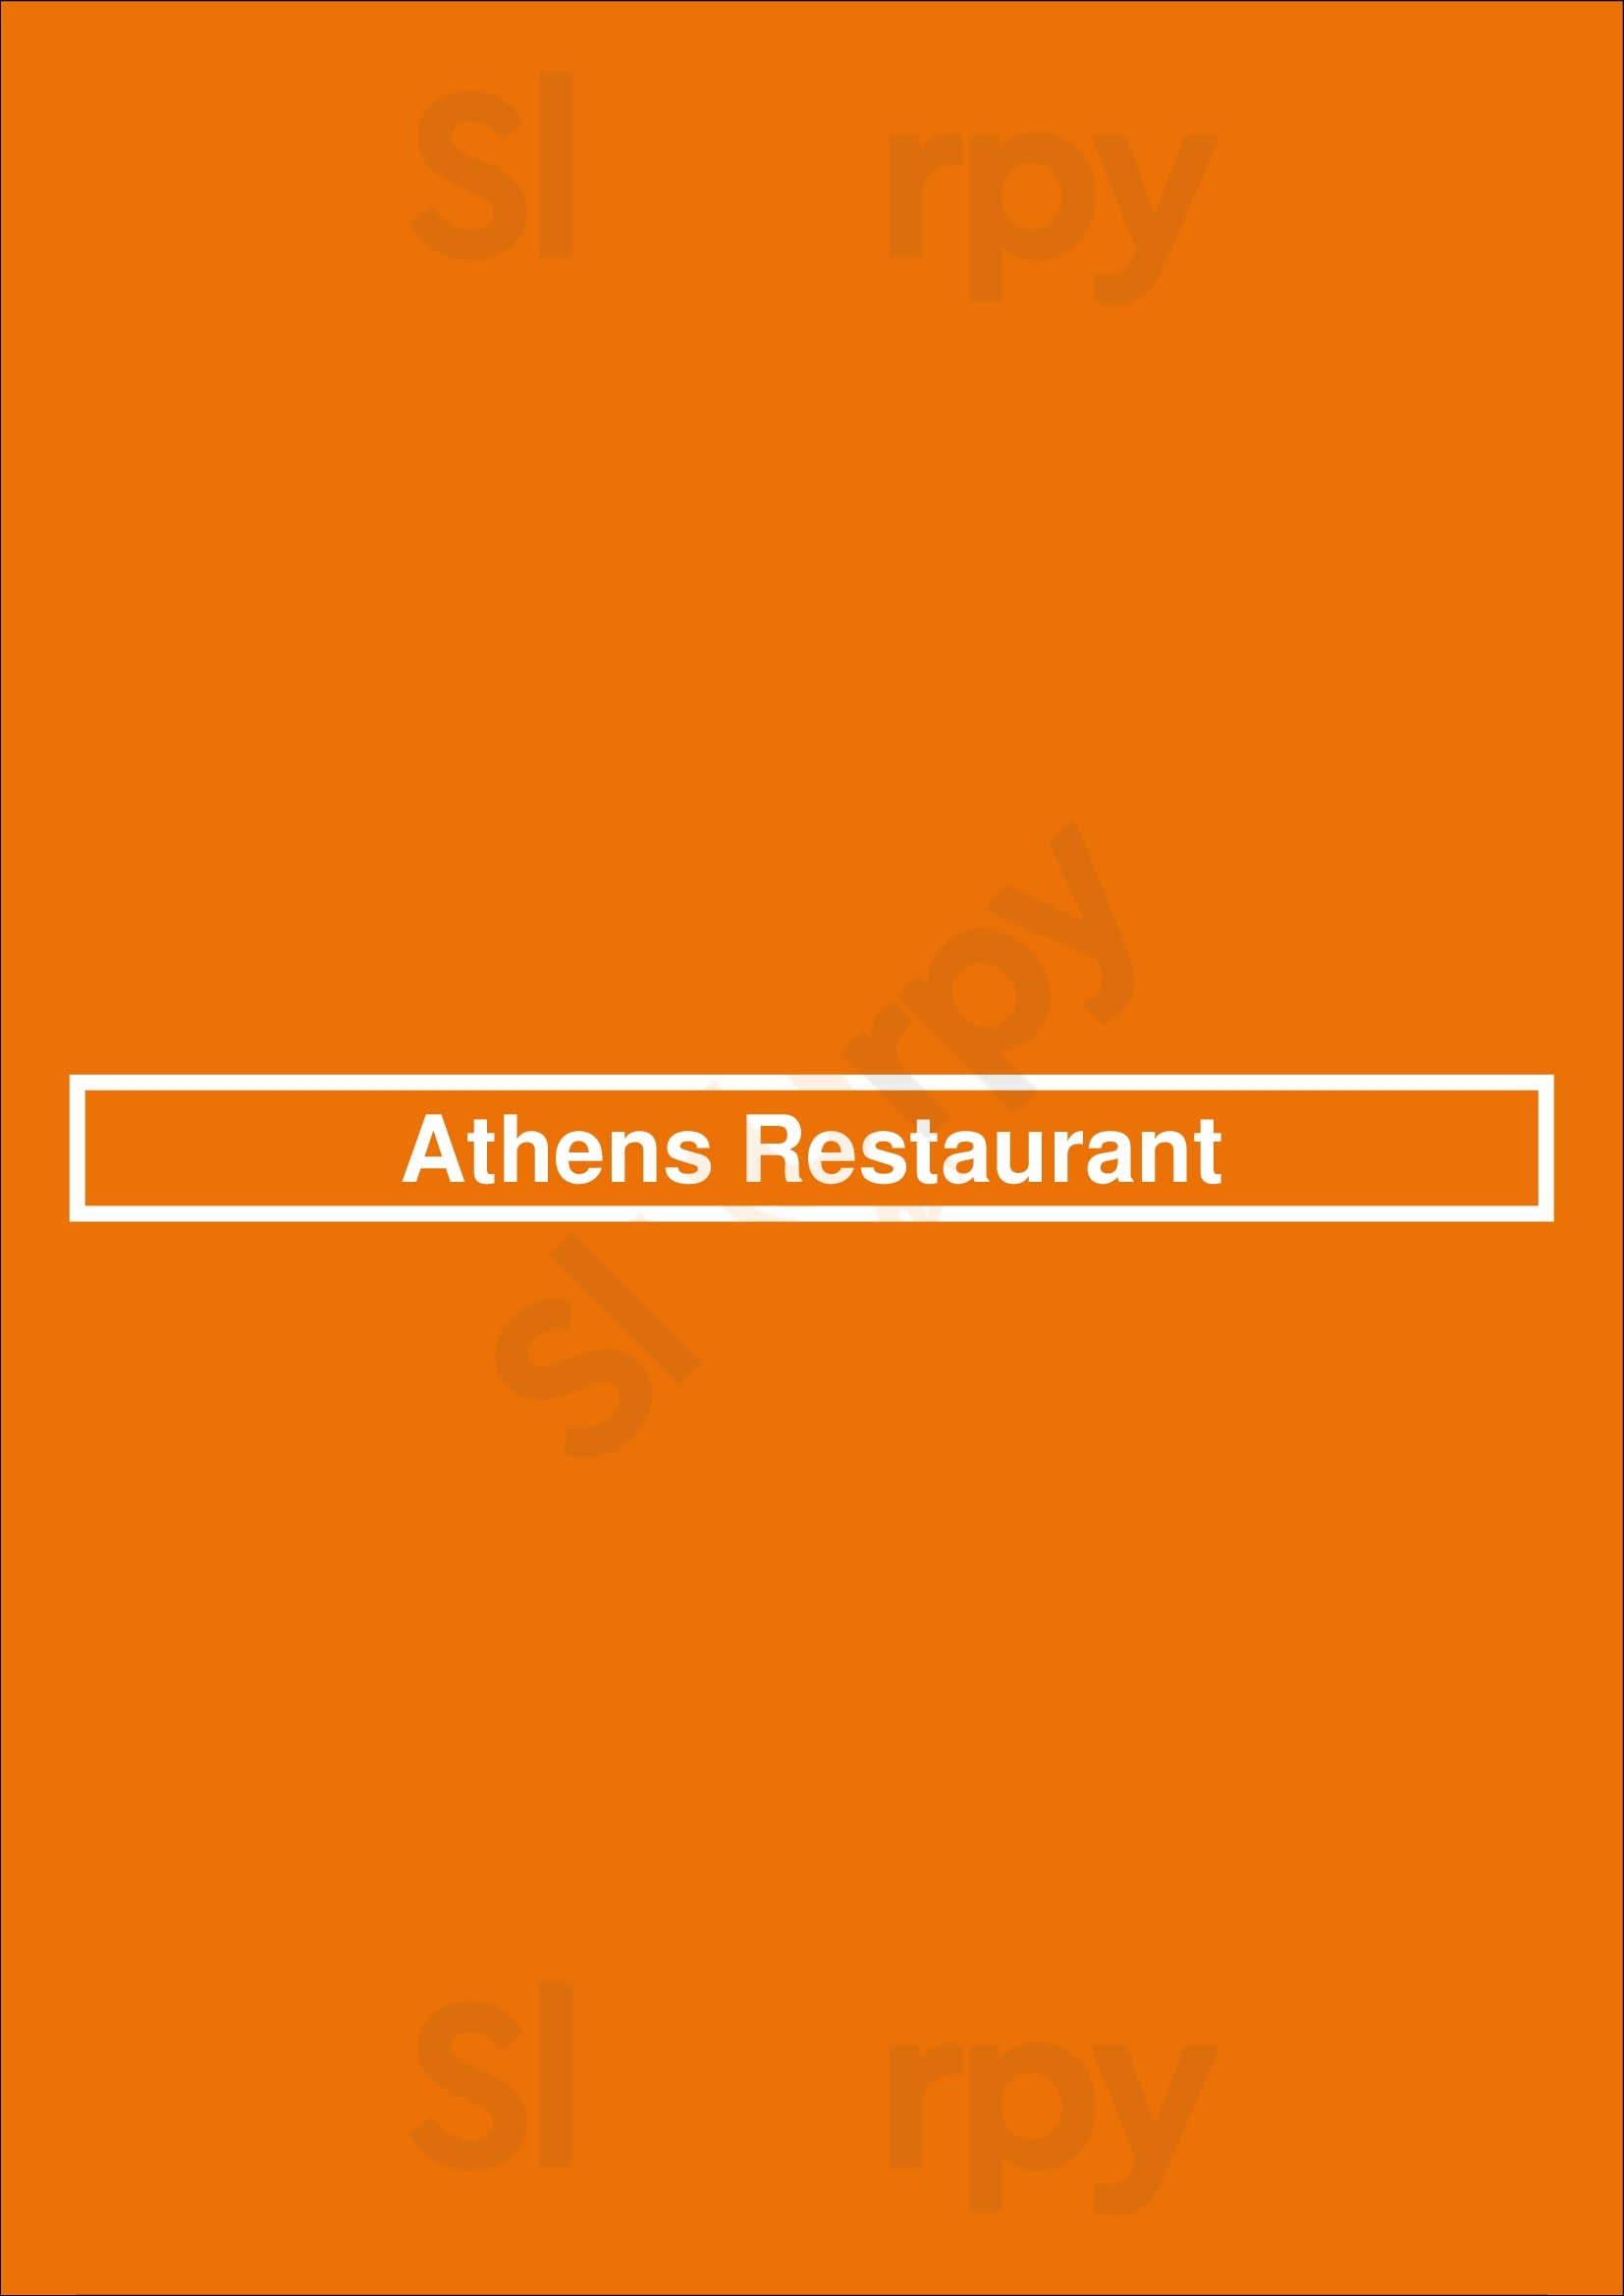 Athens Restaurant Halifax Menu - 1